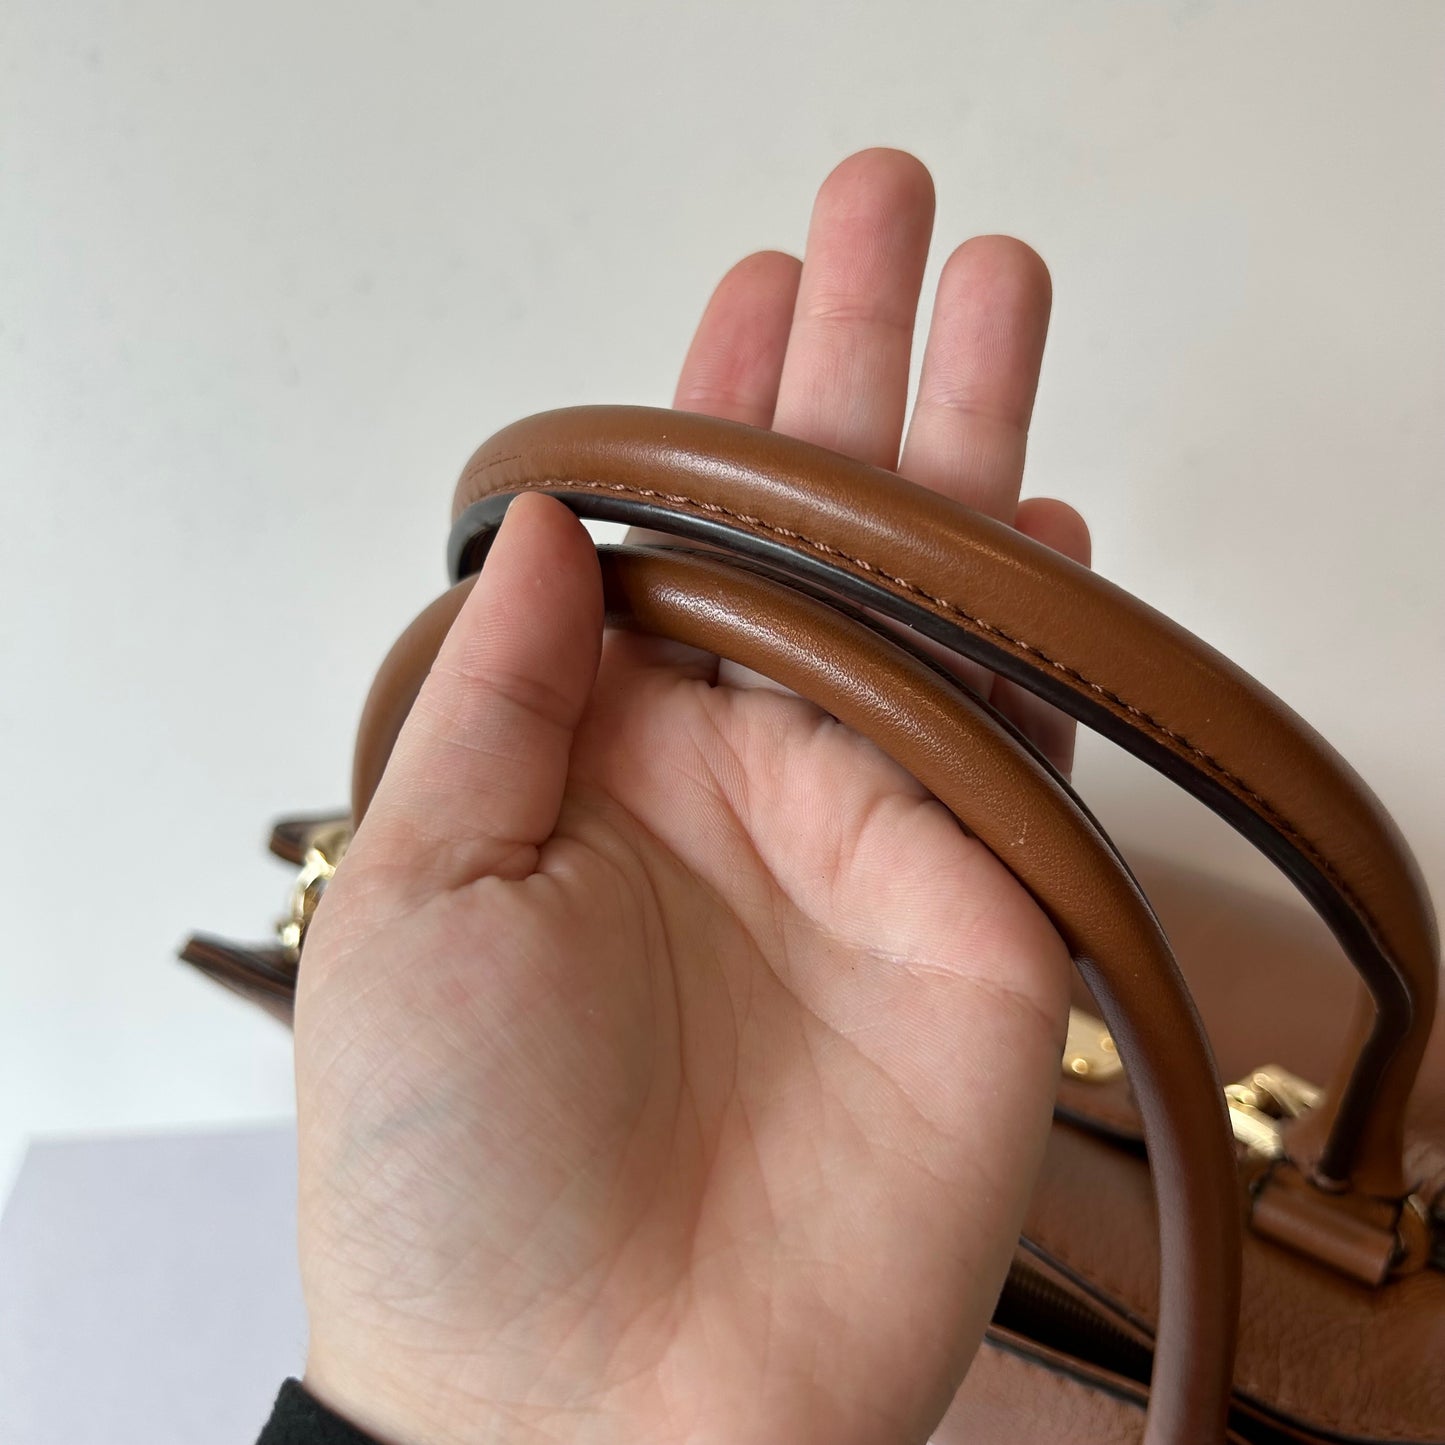 Michael Kors Brown Top Handle Handbag